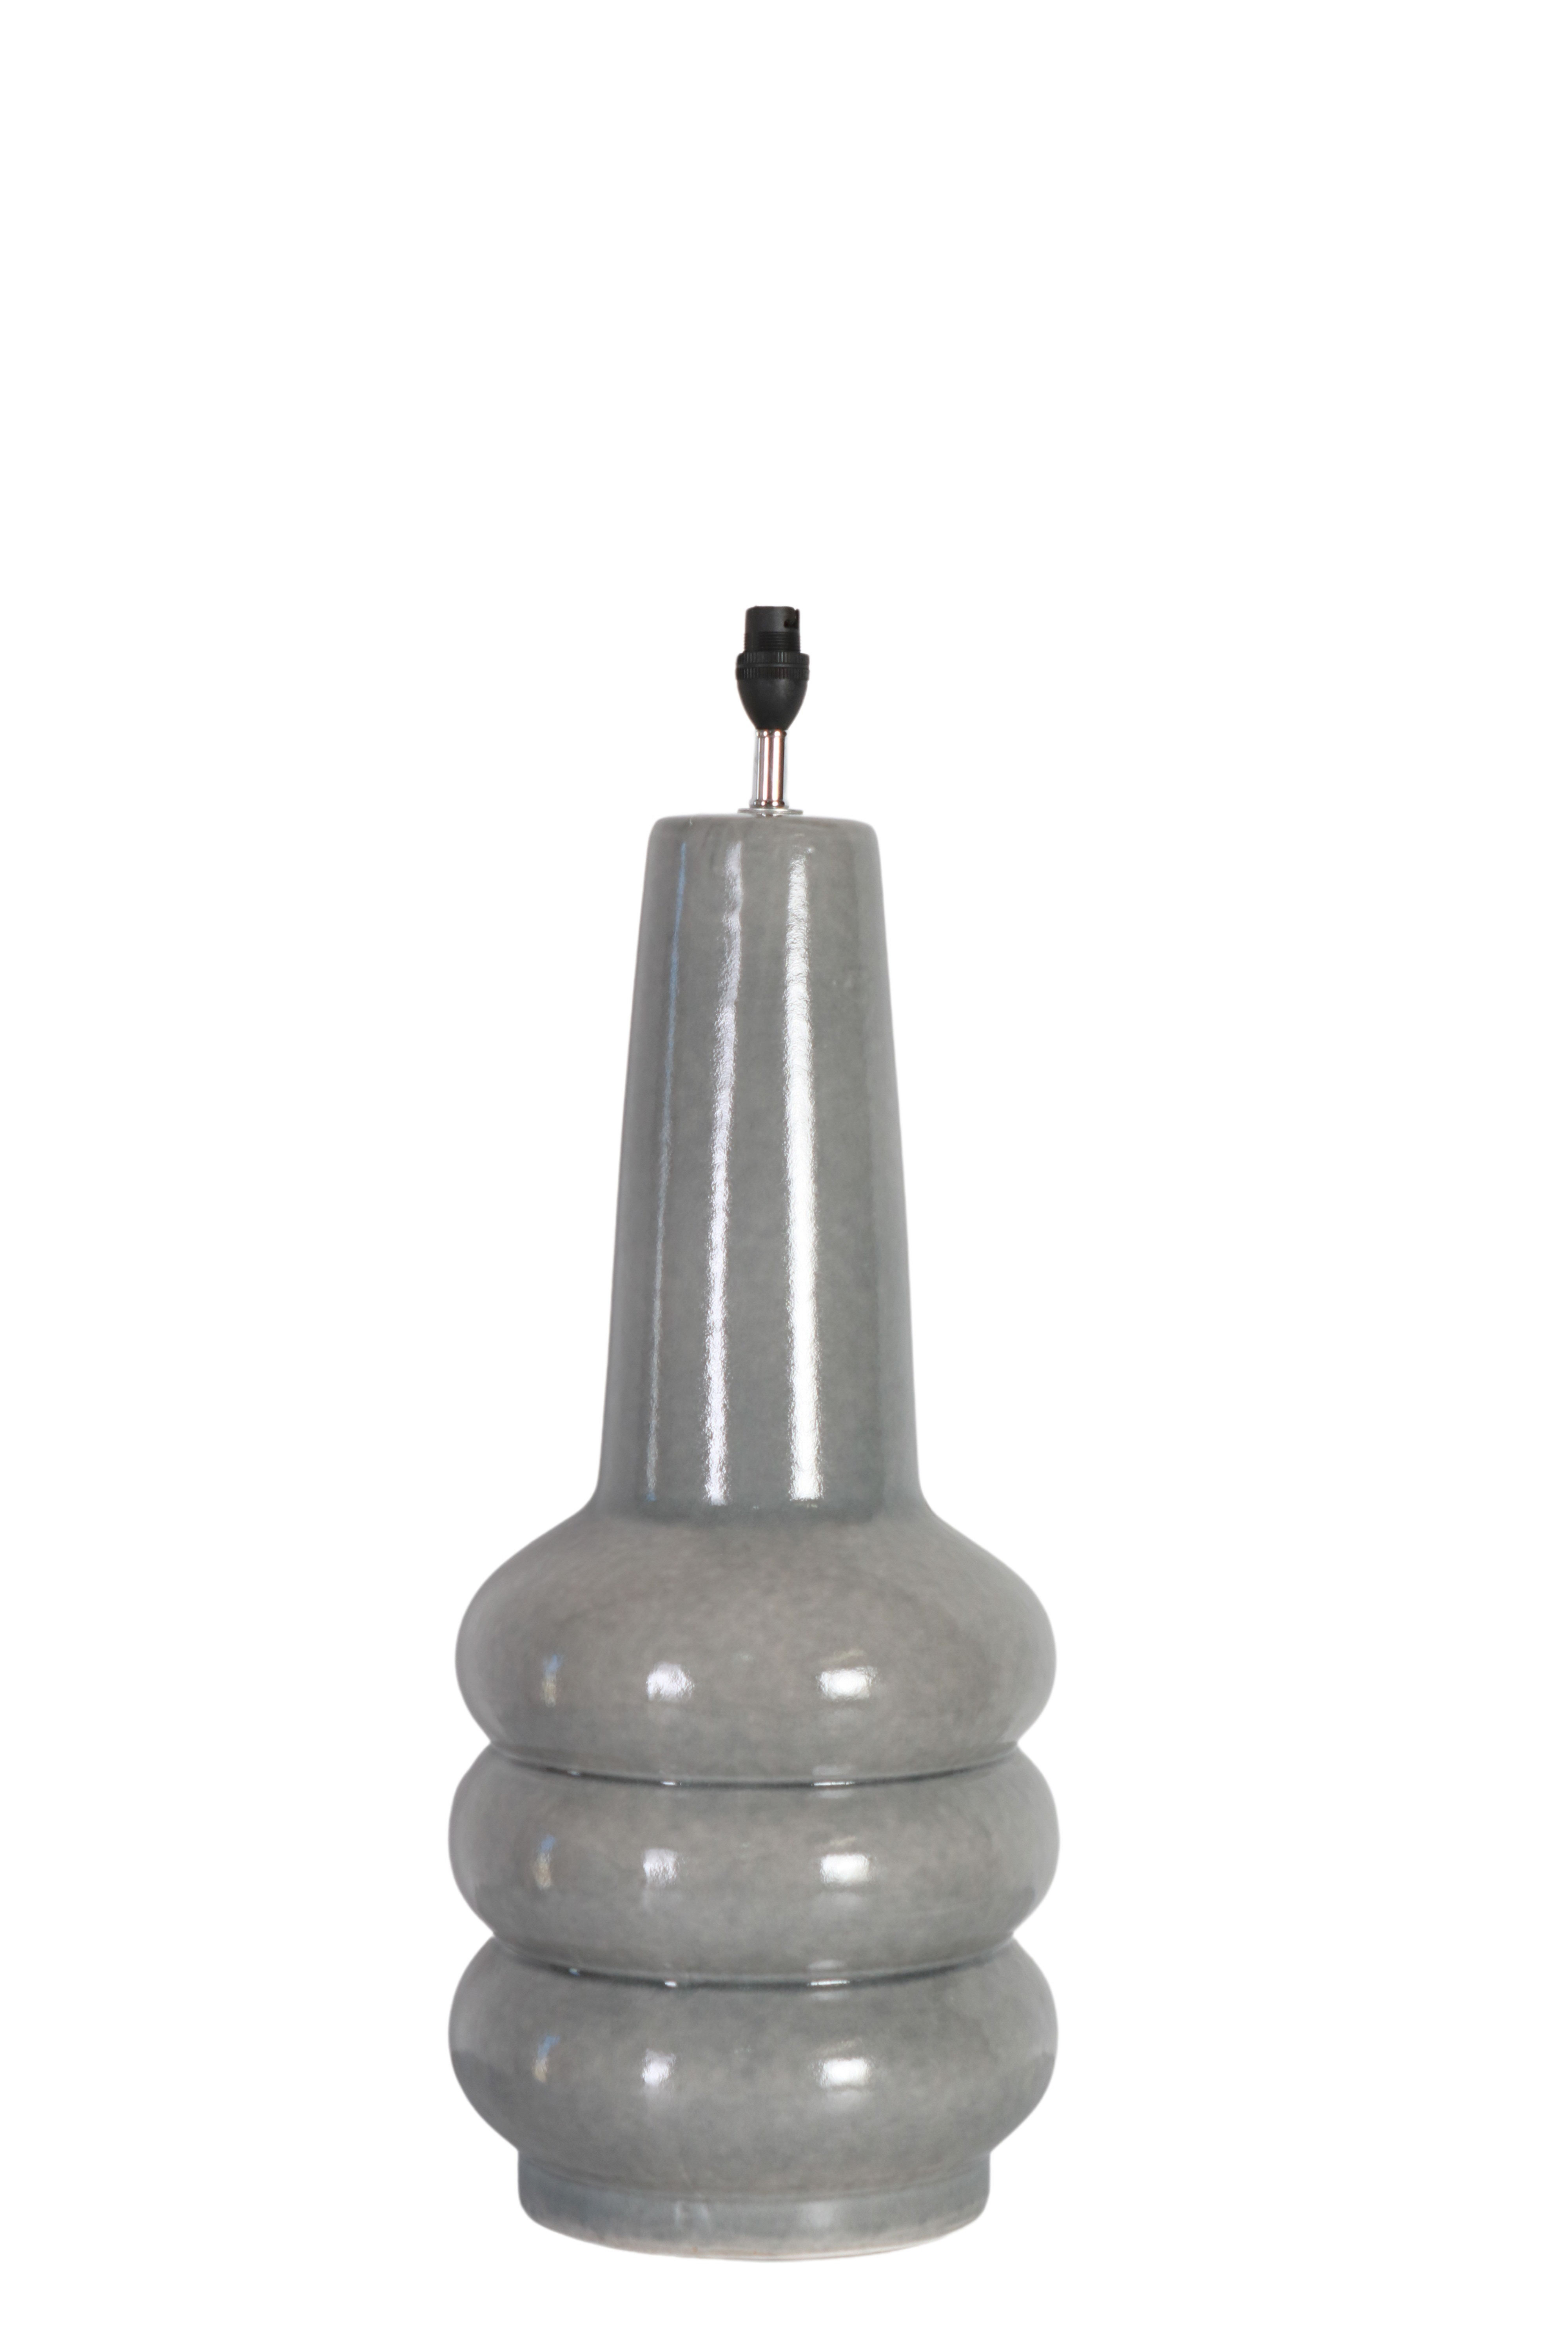 Ceramic grey lamp base 